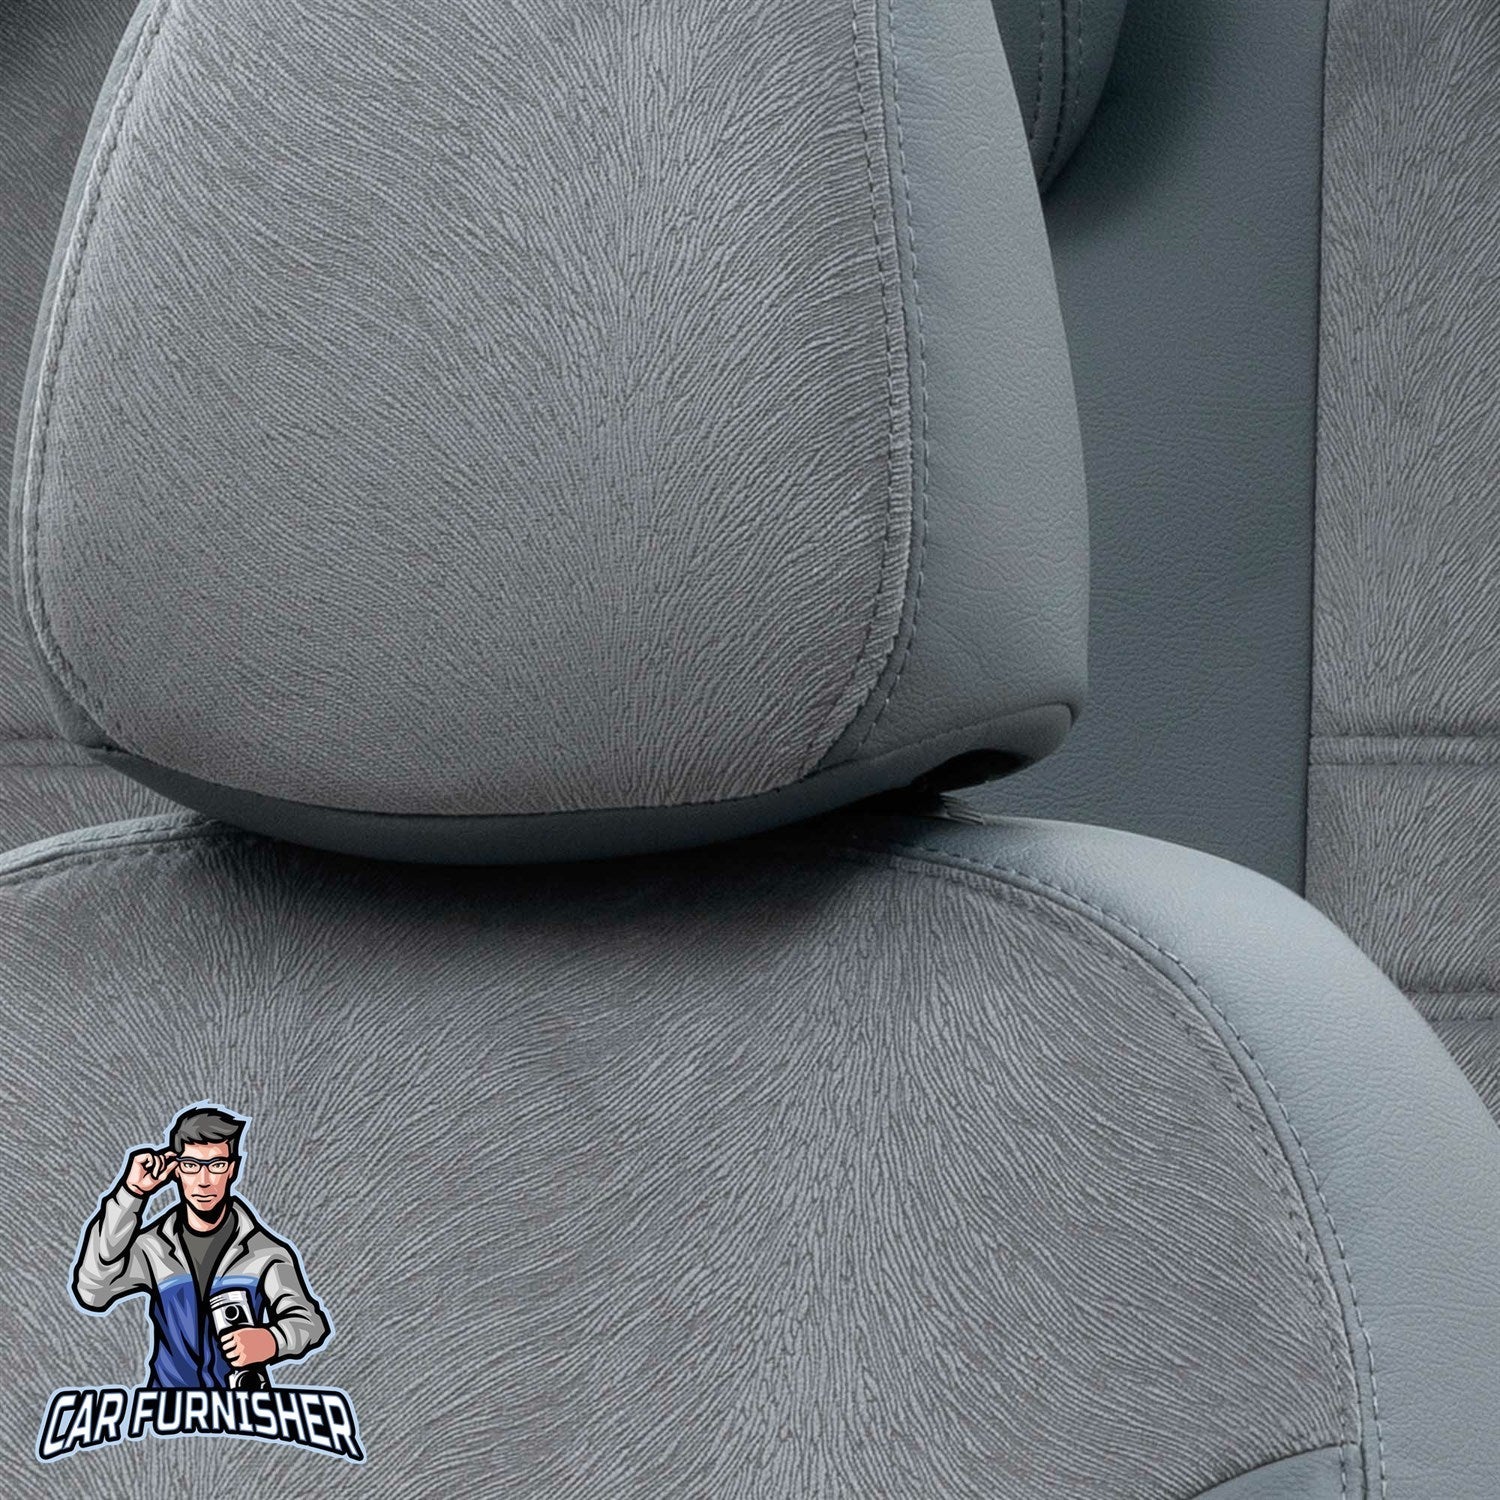 Suzuki Vitara Seat Covers London Foal Feather Design Smoked Leather & Foal Feather